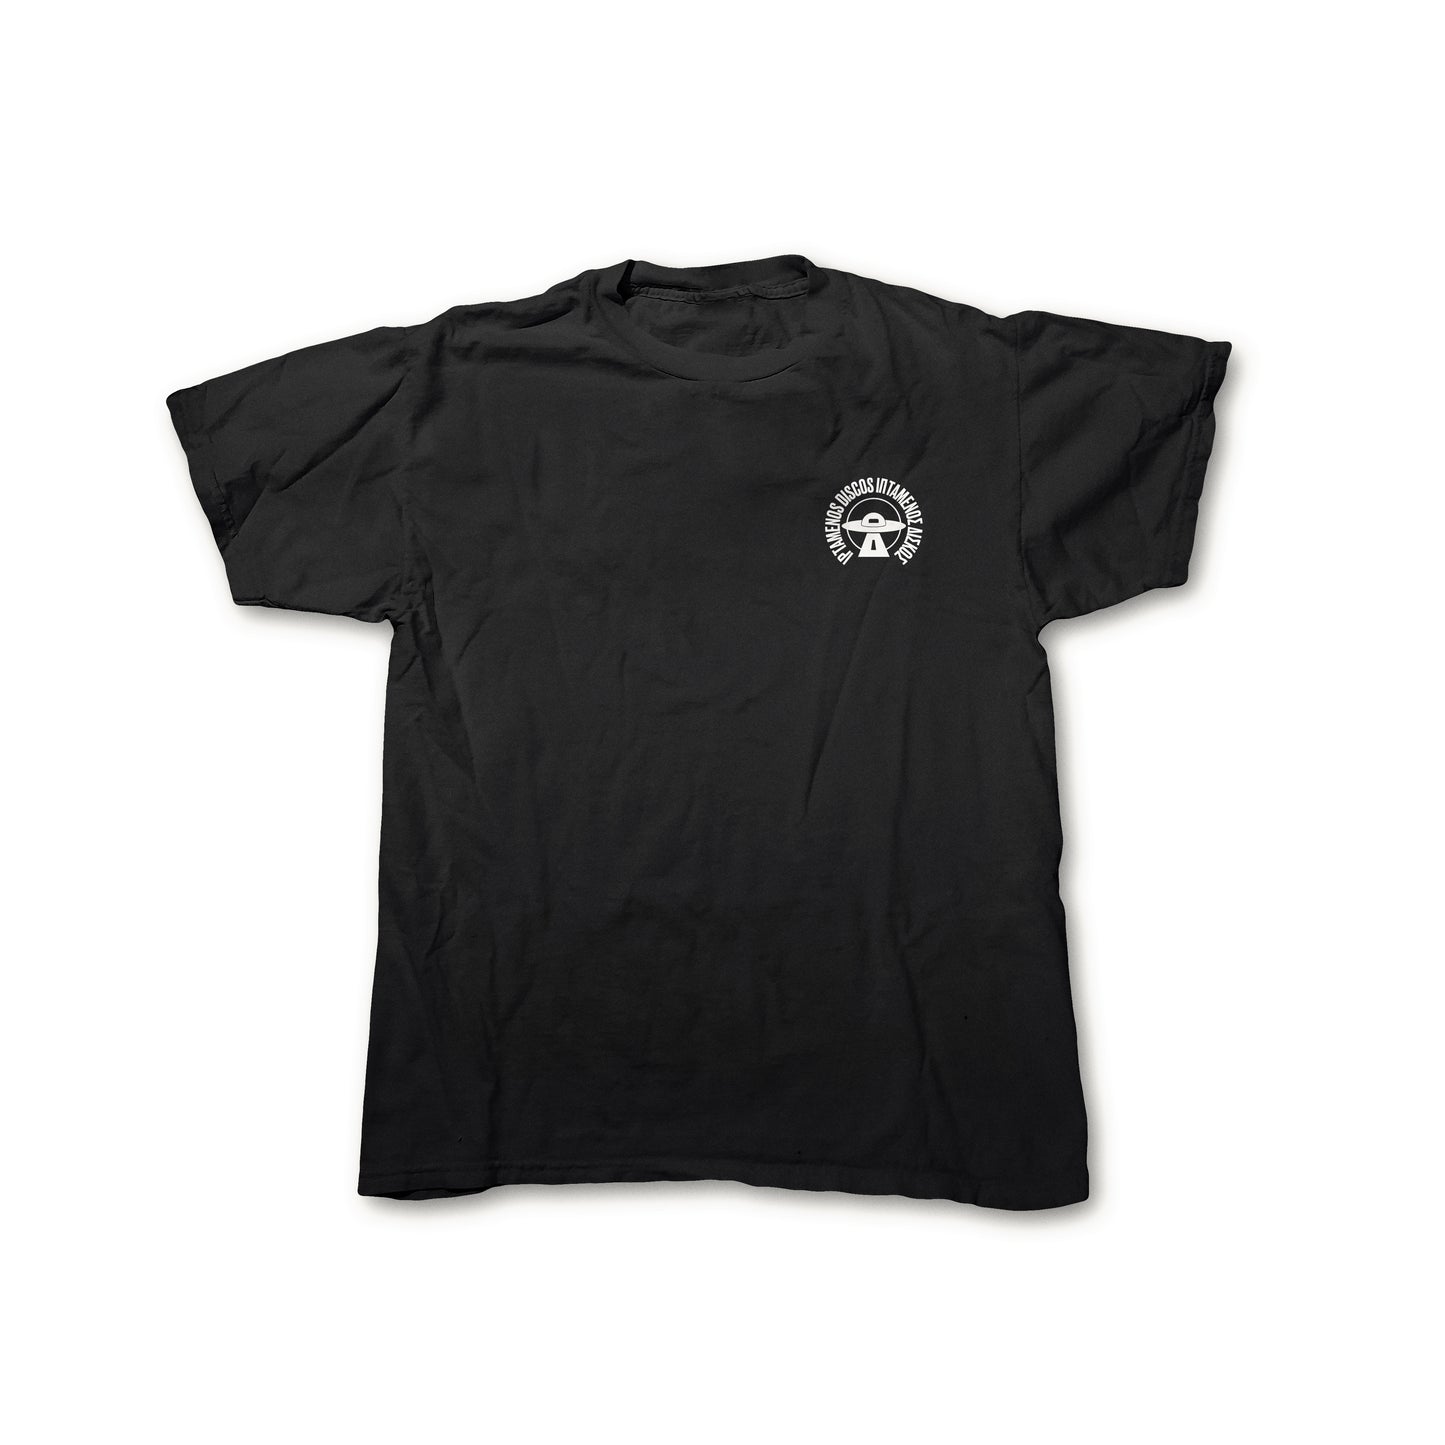 Iptamenos Discos T-Shirt III Black